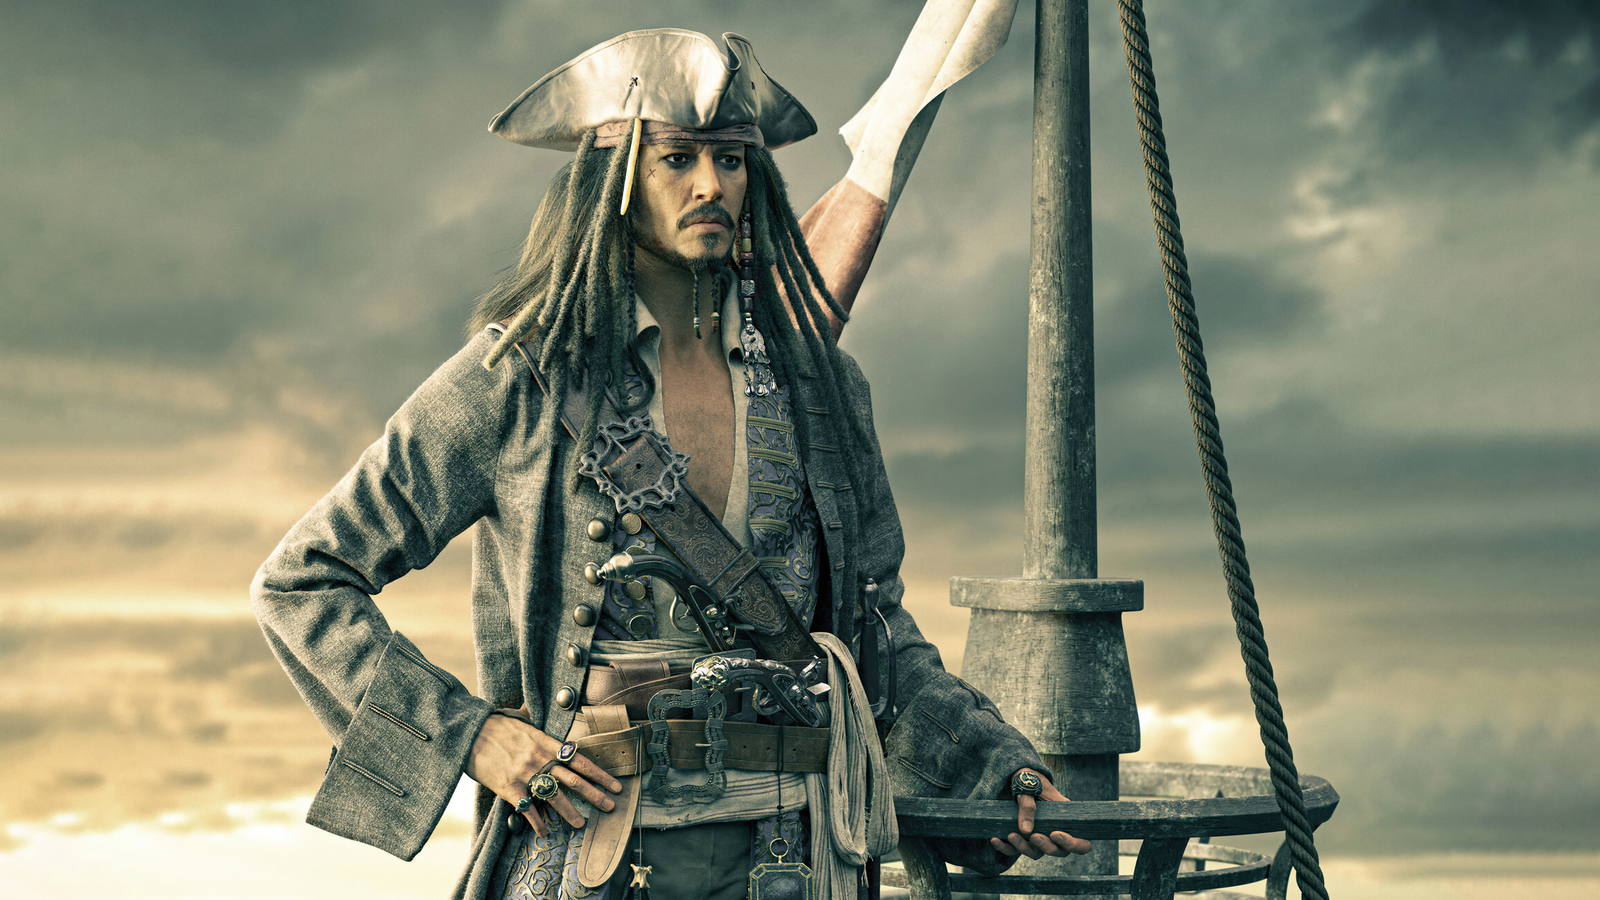 Captain Jack Sparrow Poster Pirates of the Caribbean Movie Art Film Print 24x36